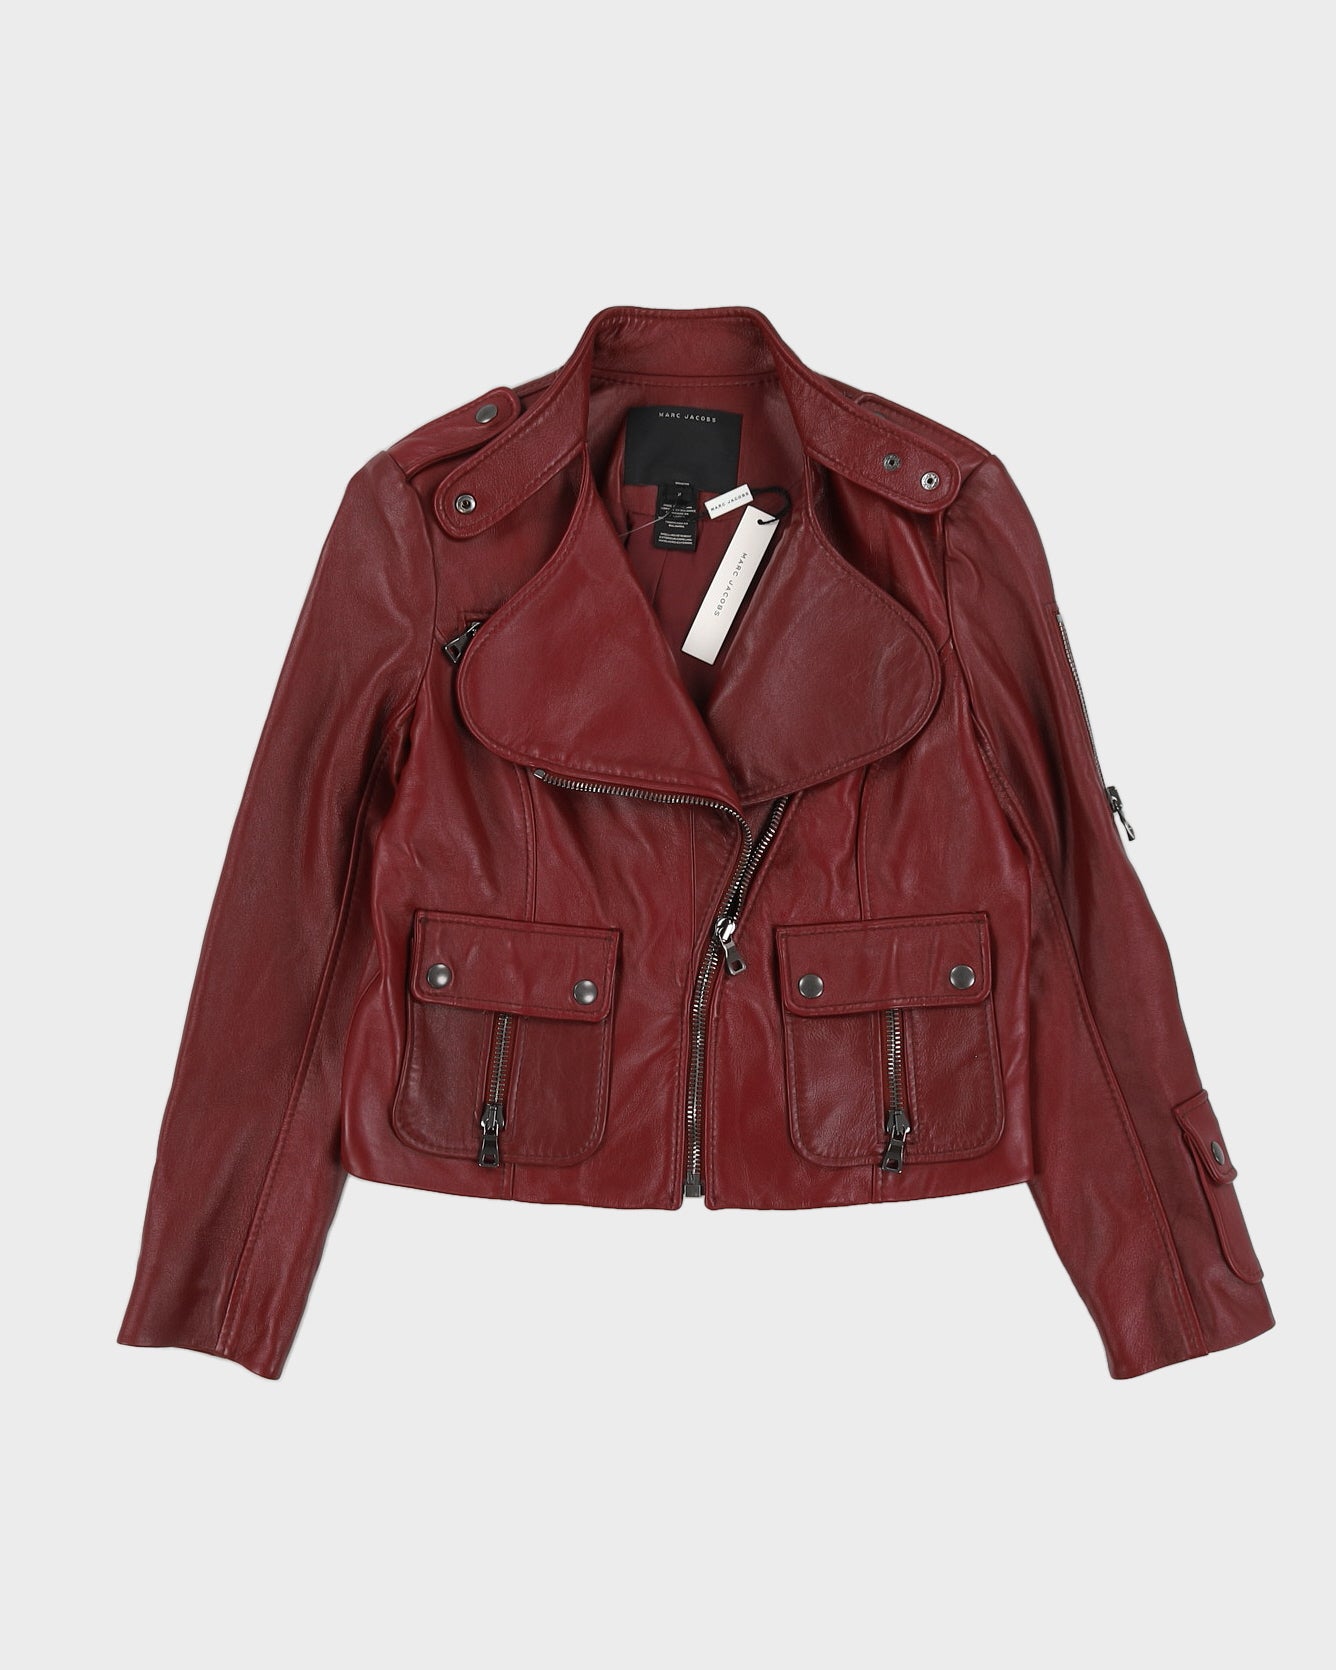 Marc Jacobs Burgundy Leather Jacket - XS